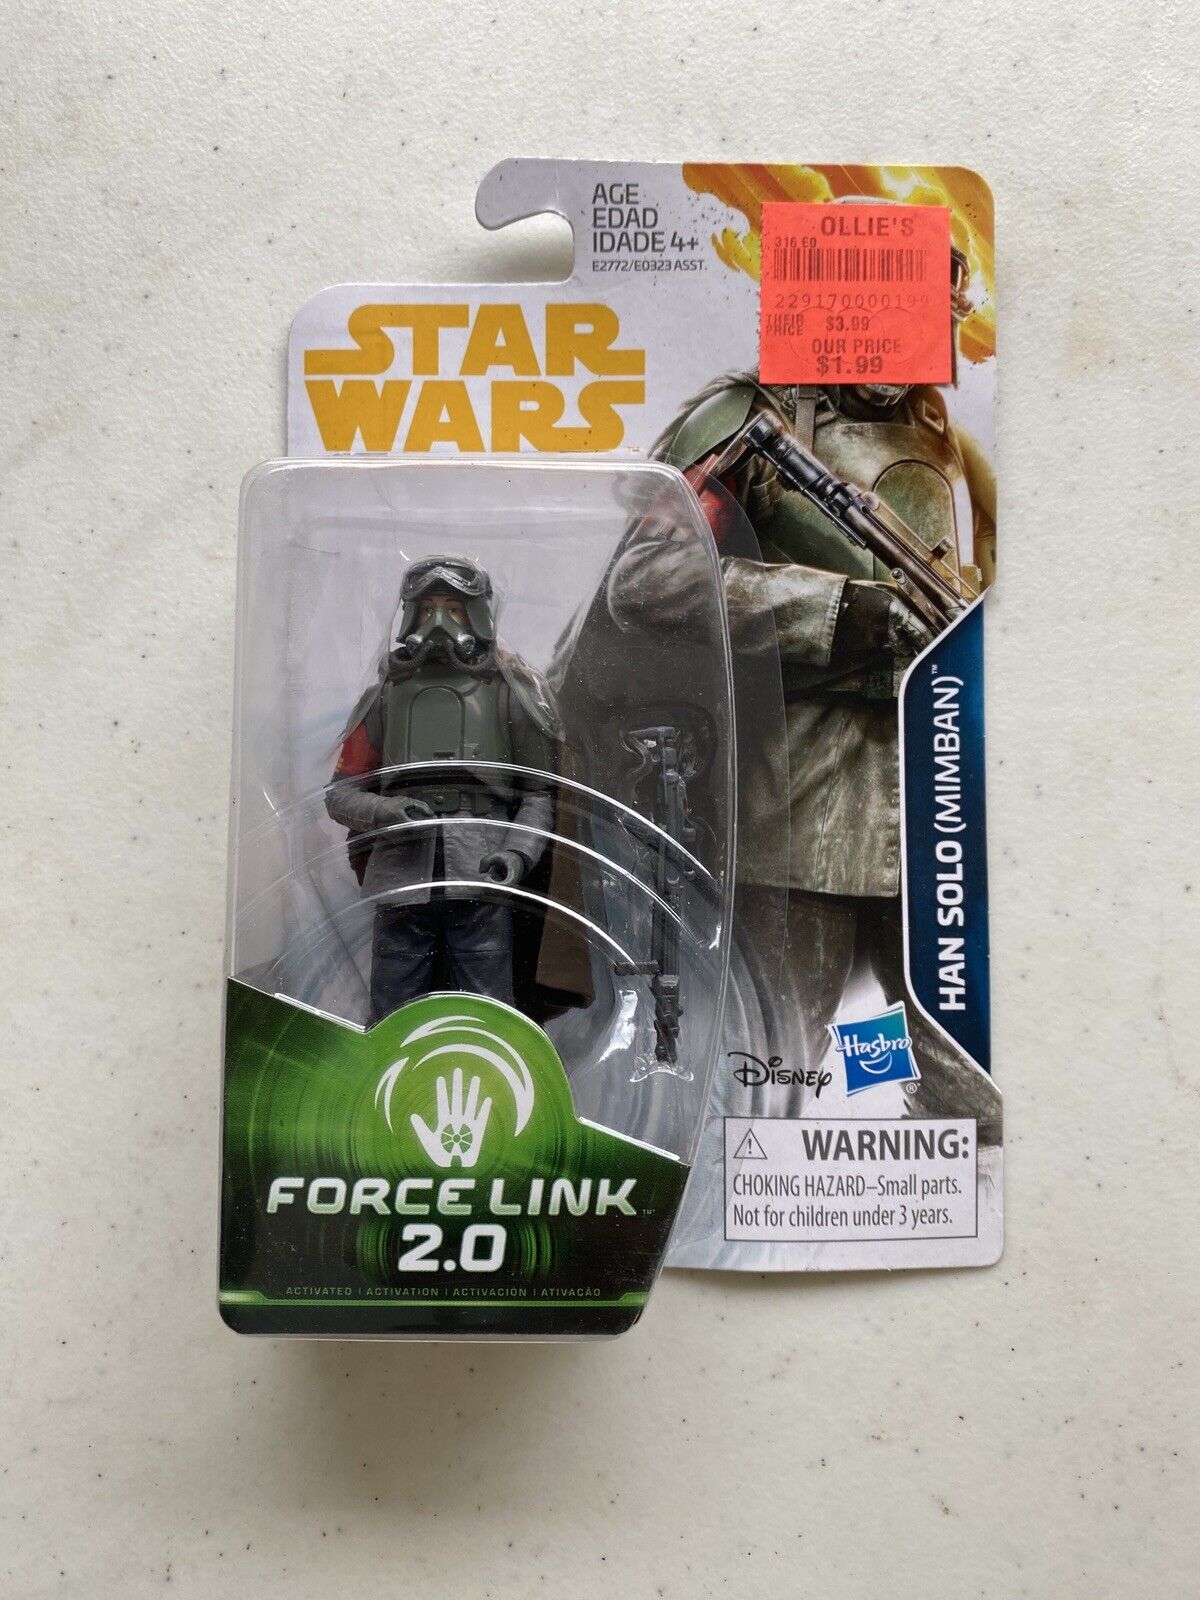 Star Wars Han Solo (Mimban) Figure Force Link 2.0 Mudtrooper Imperial Disney J13